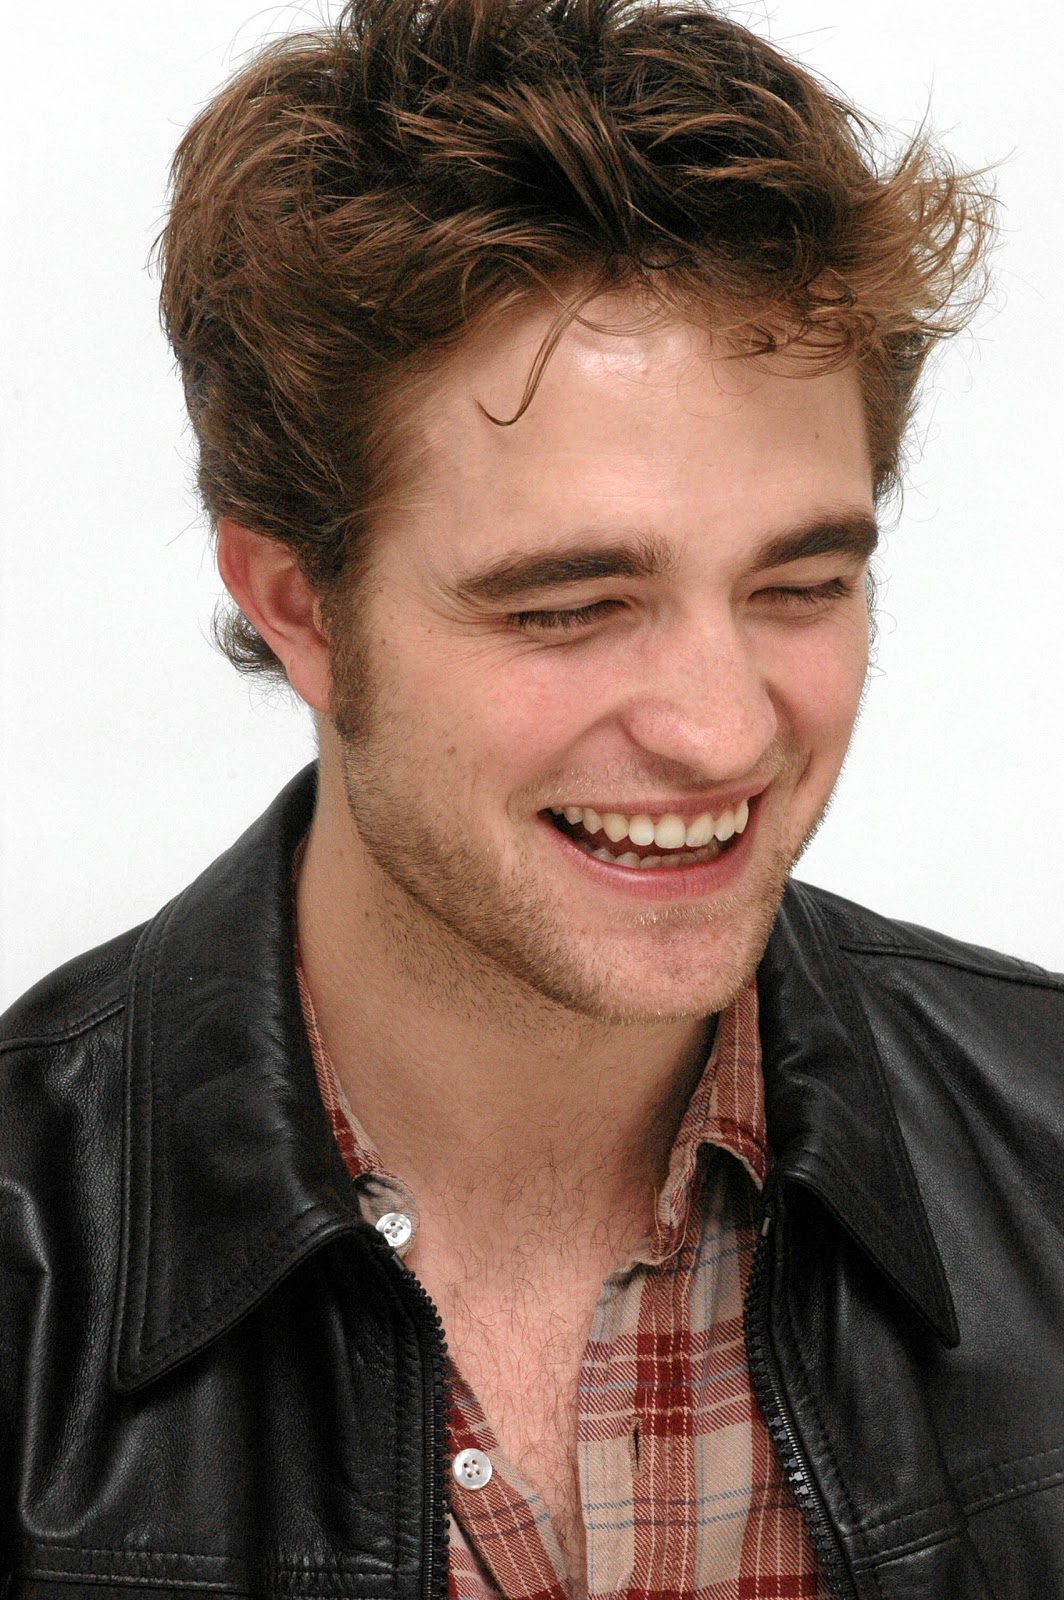 Robert Pattinson Australia: The Smile That Lights Up My World